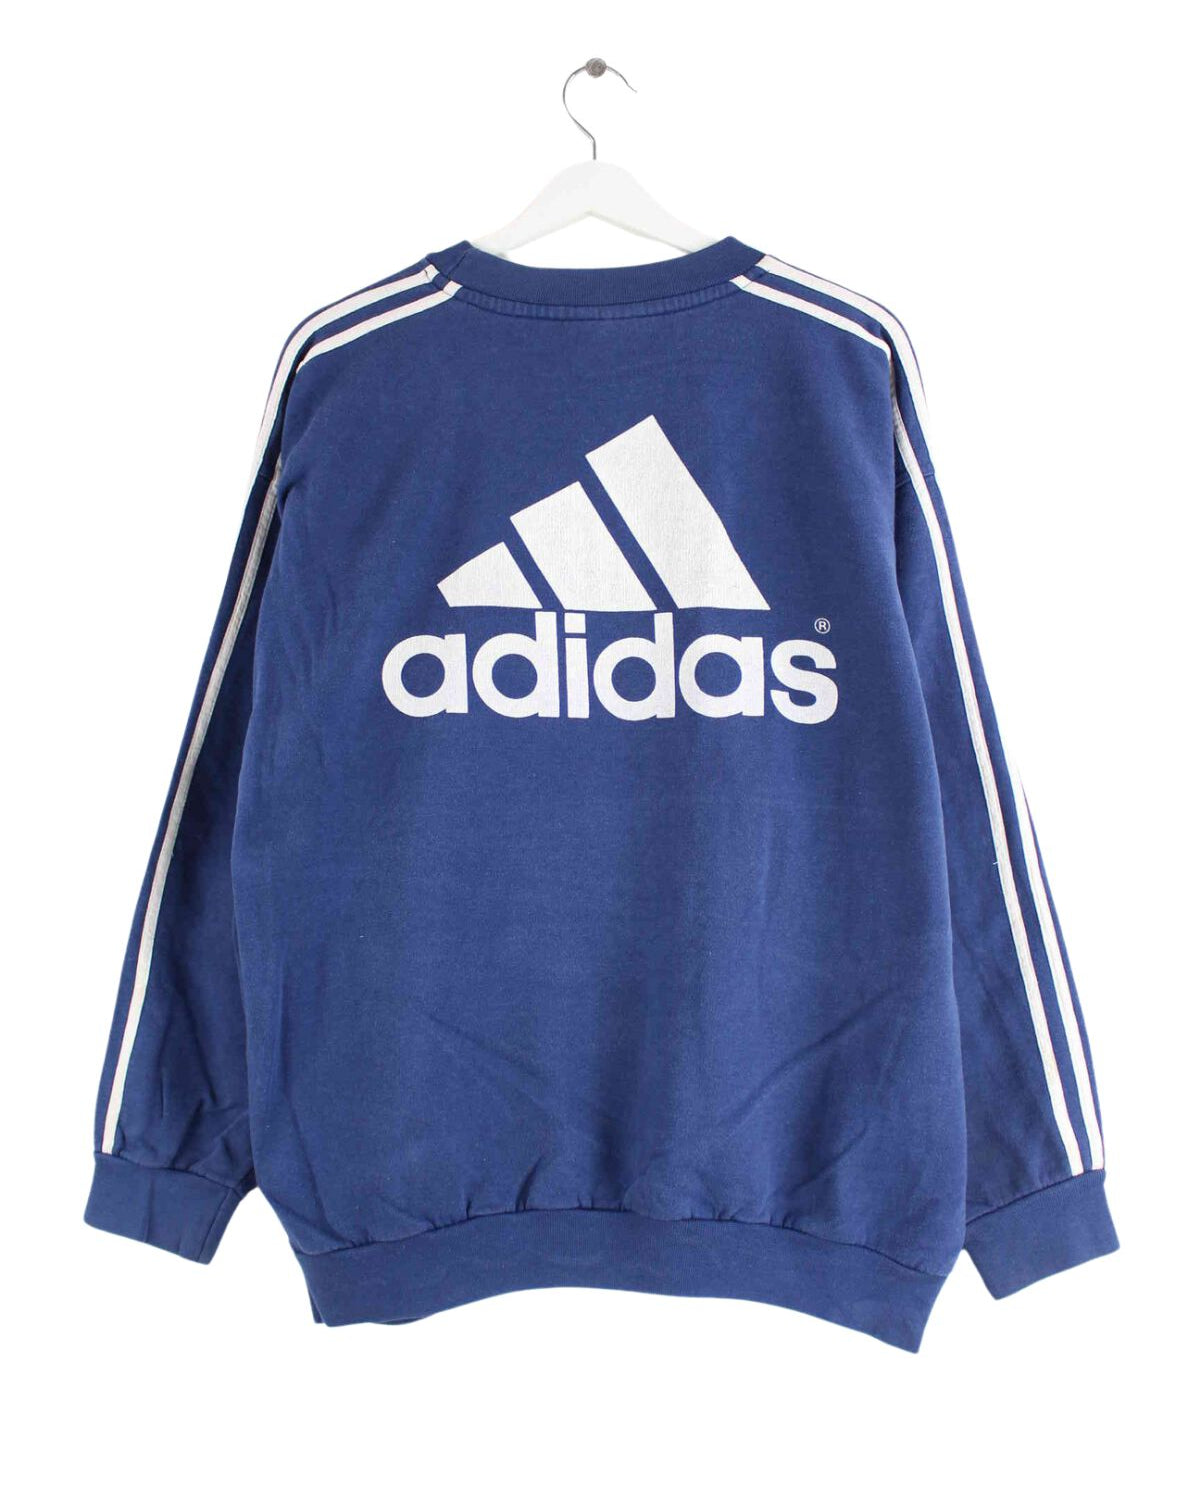 Adidas 80s Vintage Portugal Embroidered Sweater Blau XL (back image)